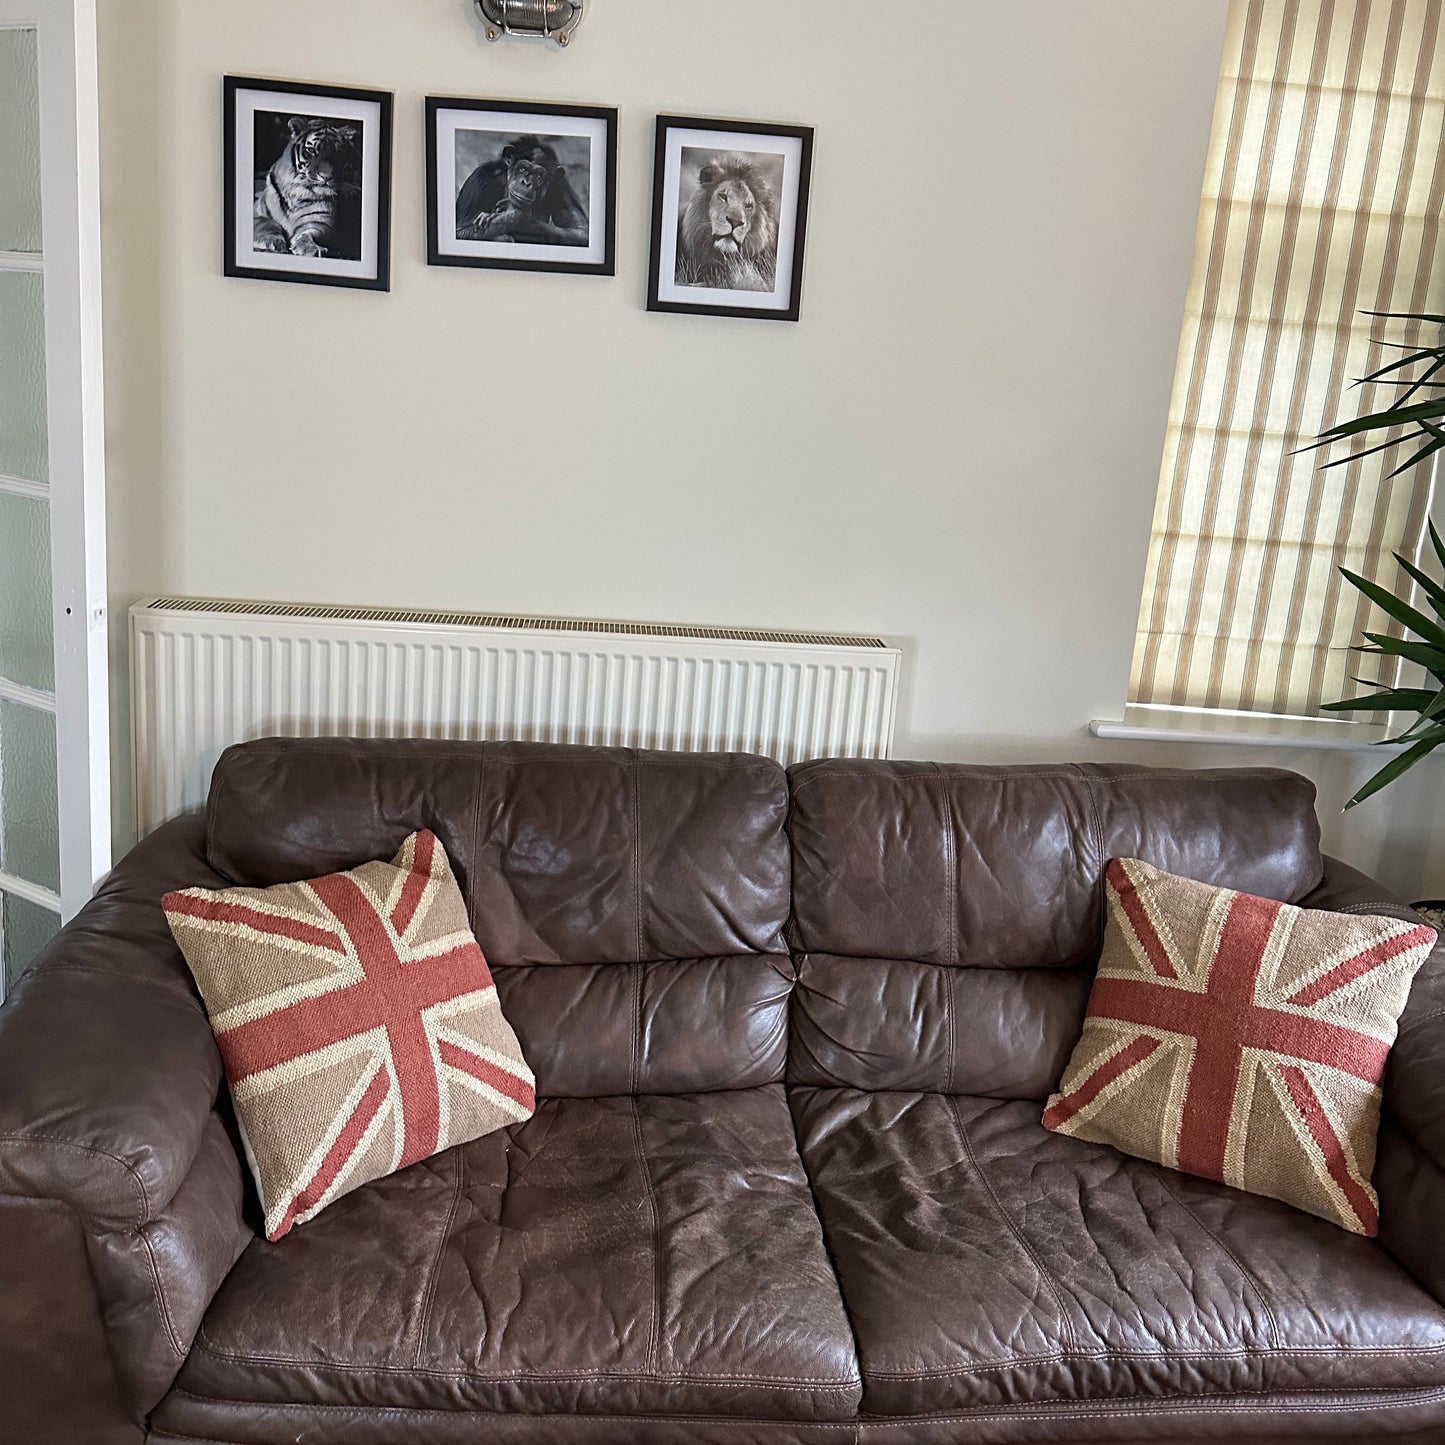 Maxlume ~ Hand Crafted Union Jack Flag Large 18” Cushion | Great Britain | Vintage Style | Man Cave